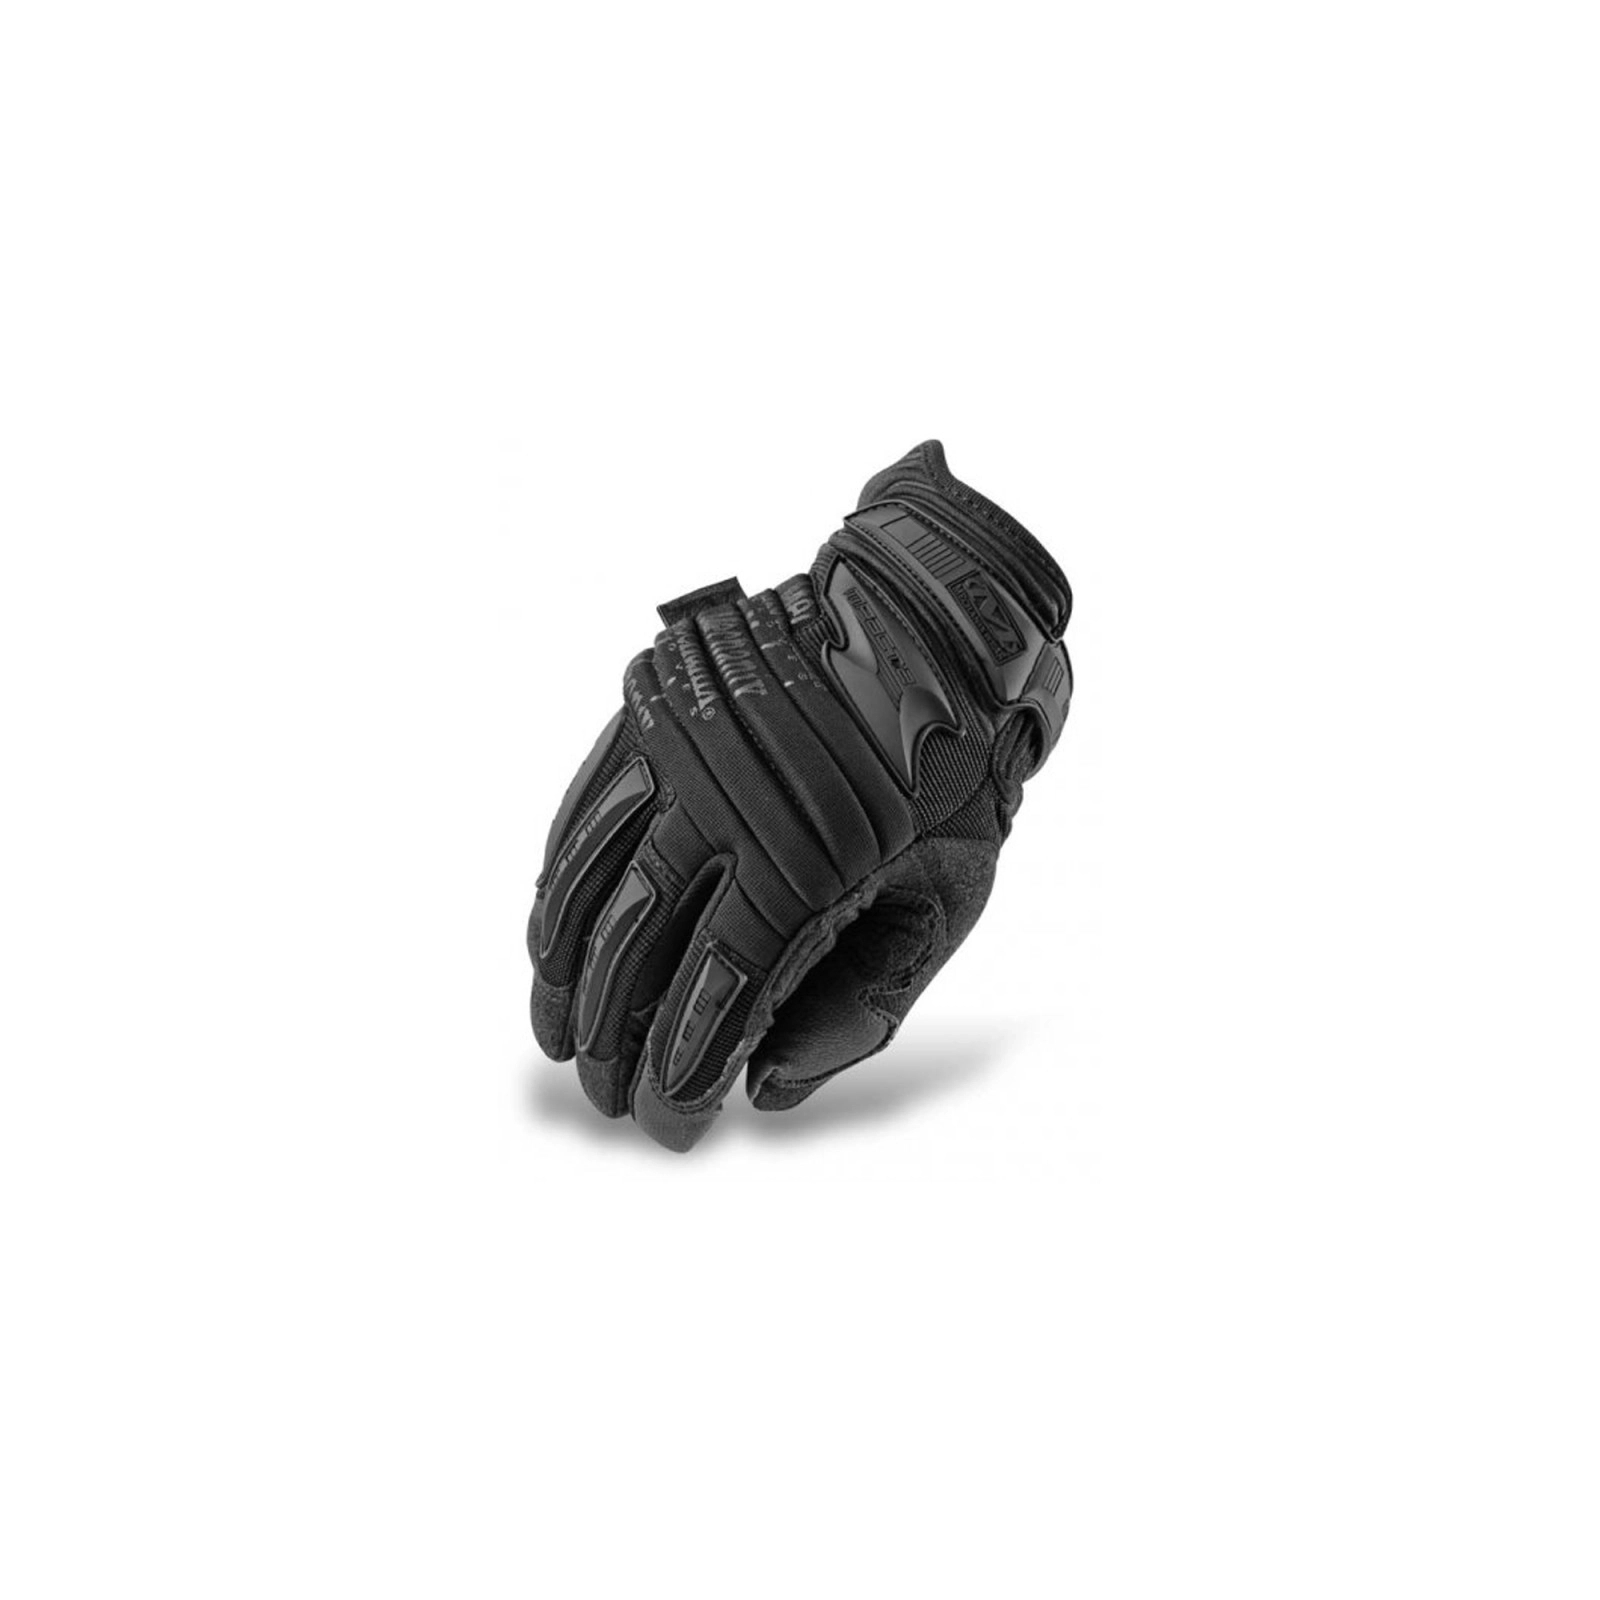 Захисні рукавиці Mechanix M-Pact 2 Covert (XL) (MP2-55-011)